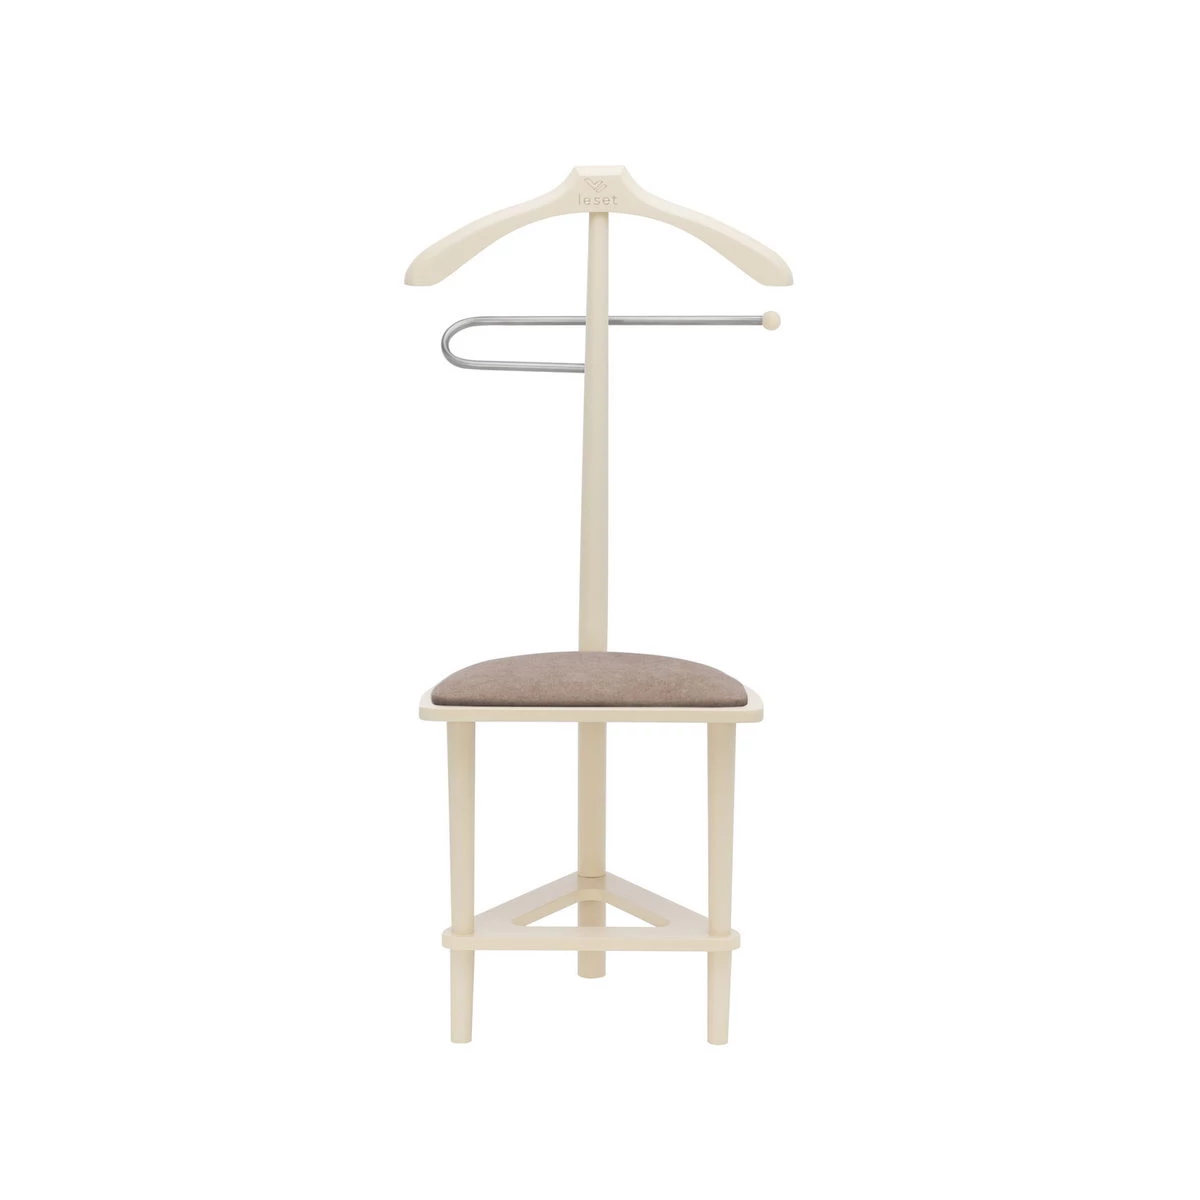 Вешалка со стулом Leset Атланта (Импэкс). Цвет каркаса: Белый; Цвет обивки: Коричневый; Цвет ножек: Белый